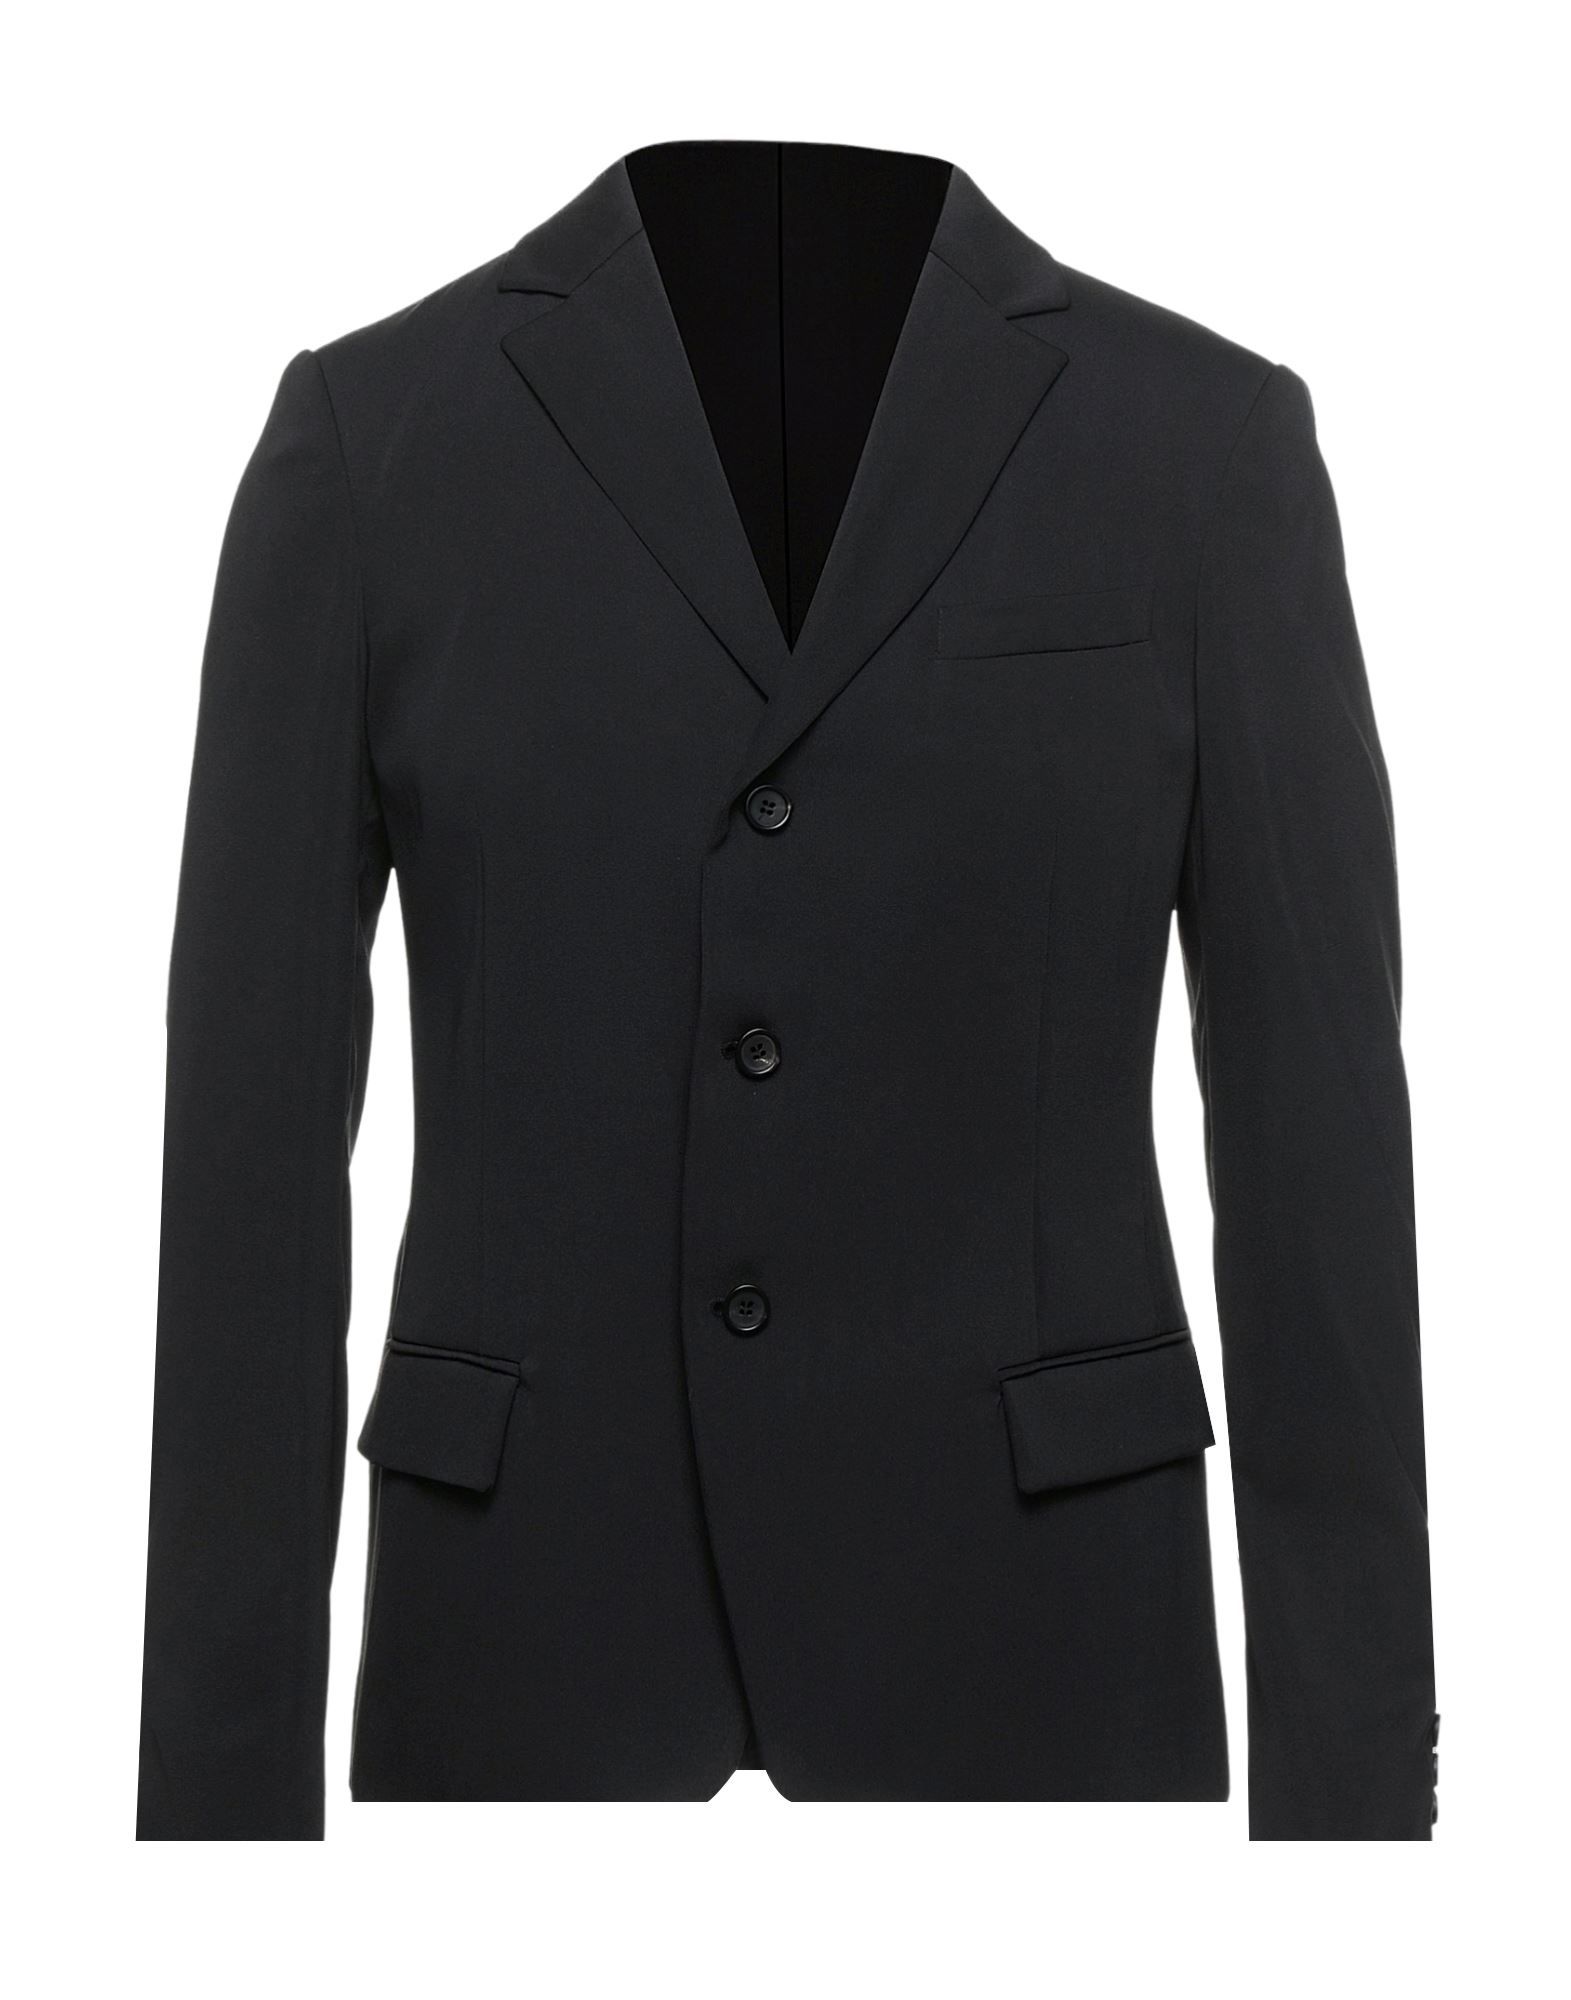 Ermanno Scervino Suit Jackets In Black